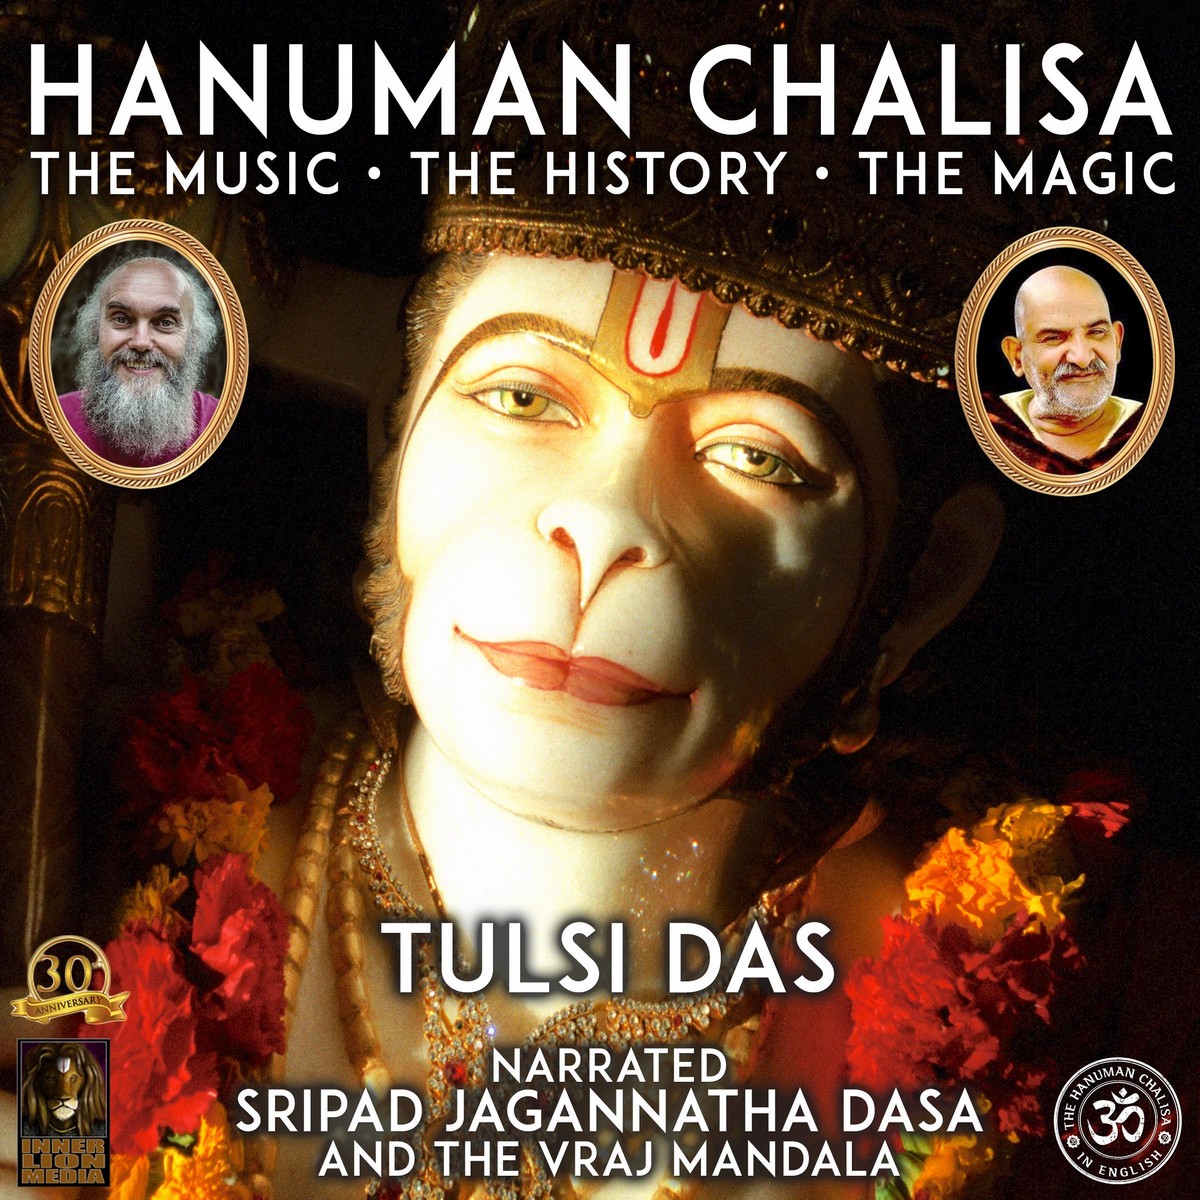 Hanuman Chalisa The Music The History The Magic